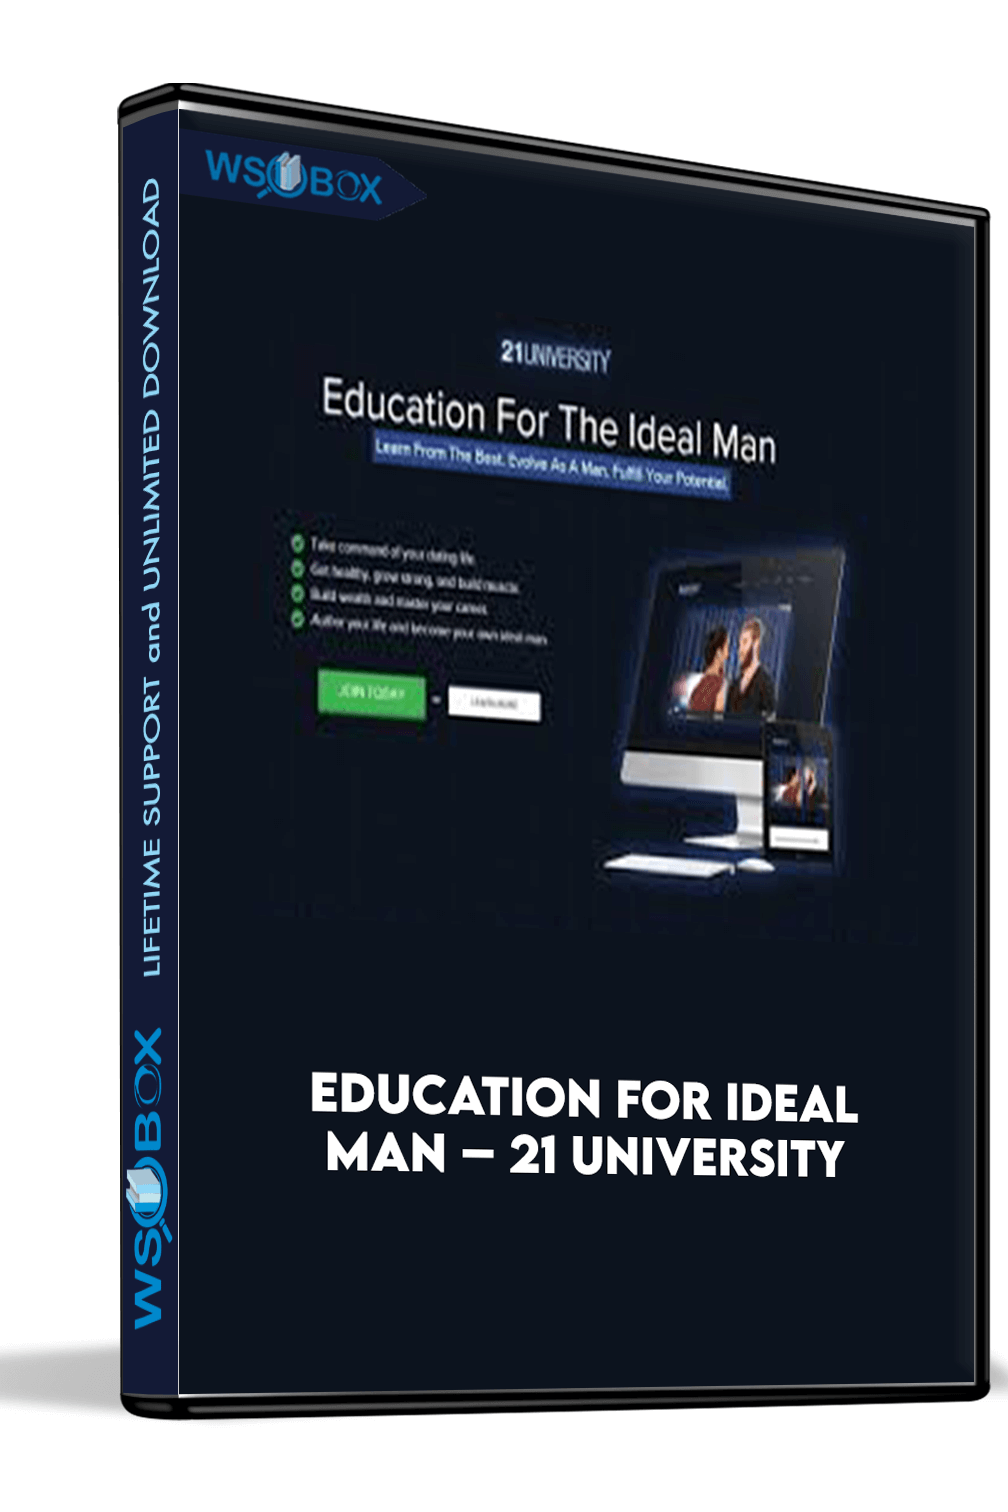 education-for-ideal-man-21-university